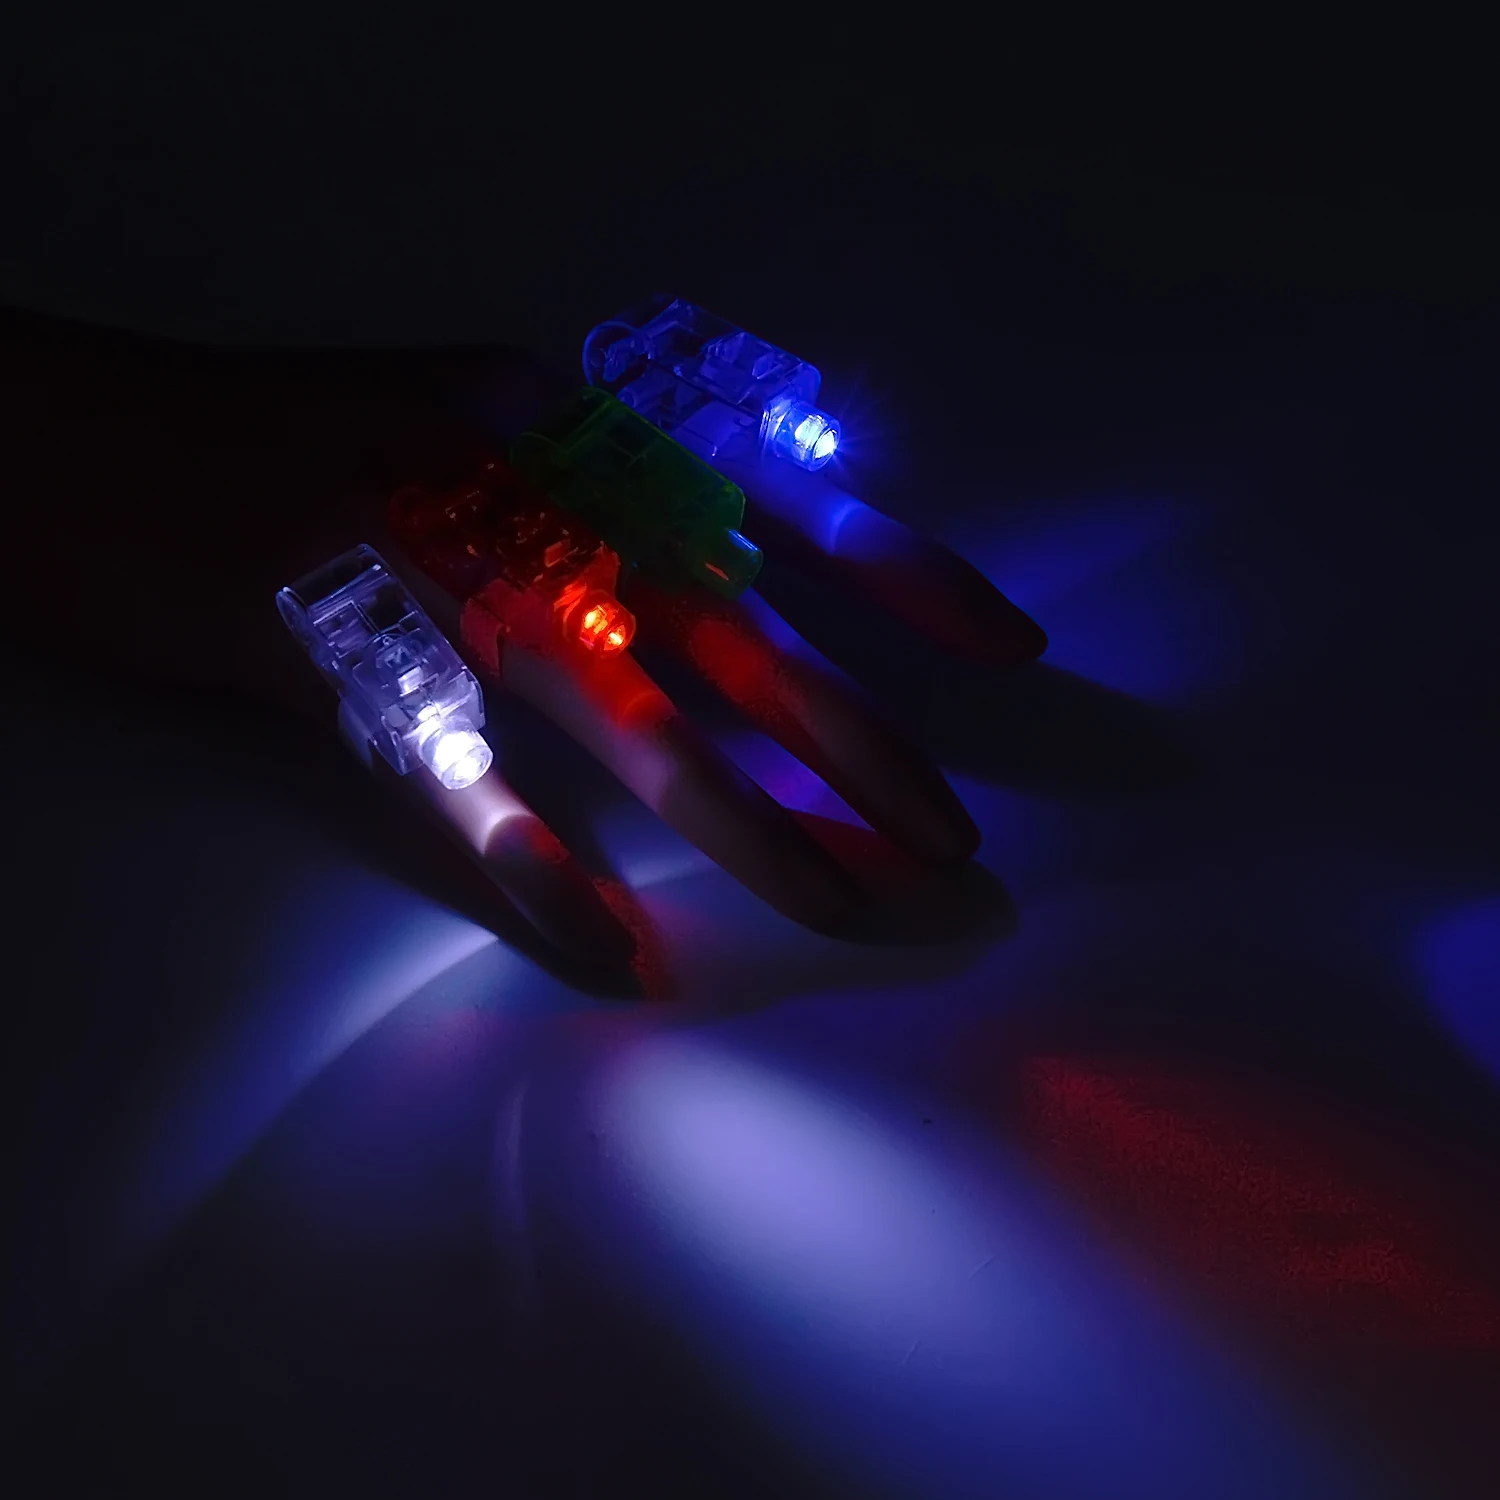 12 pieces Finger Flick Mood Light - Light Up Toys - at